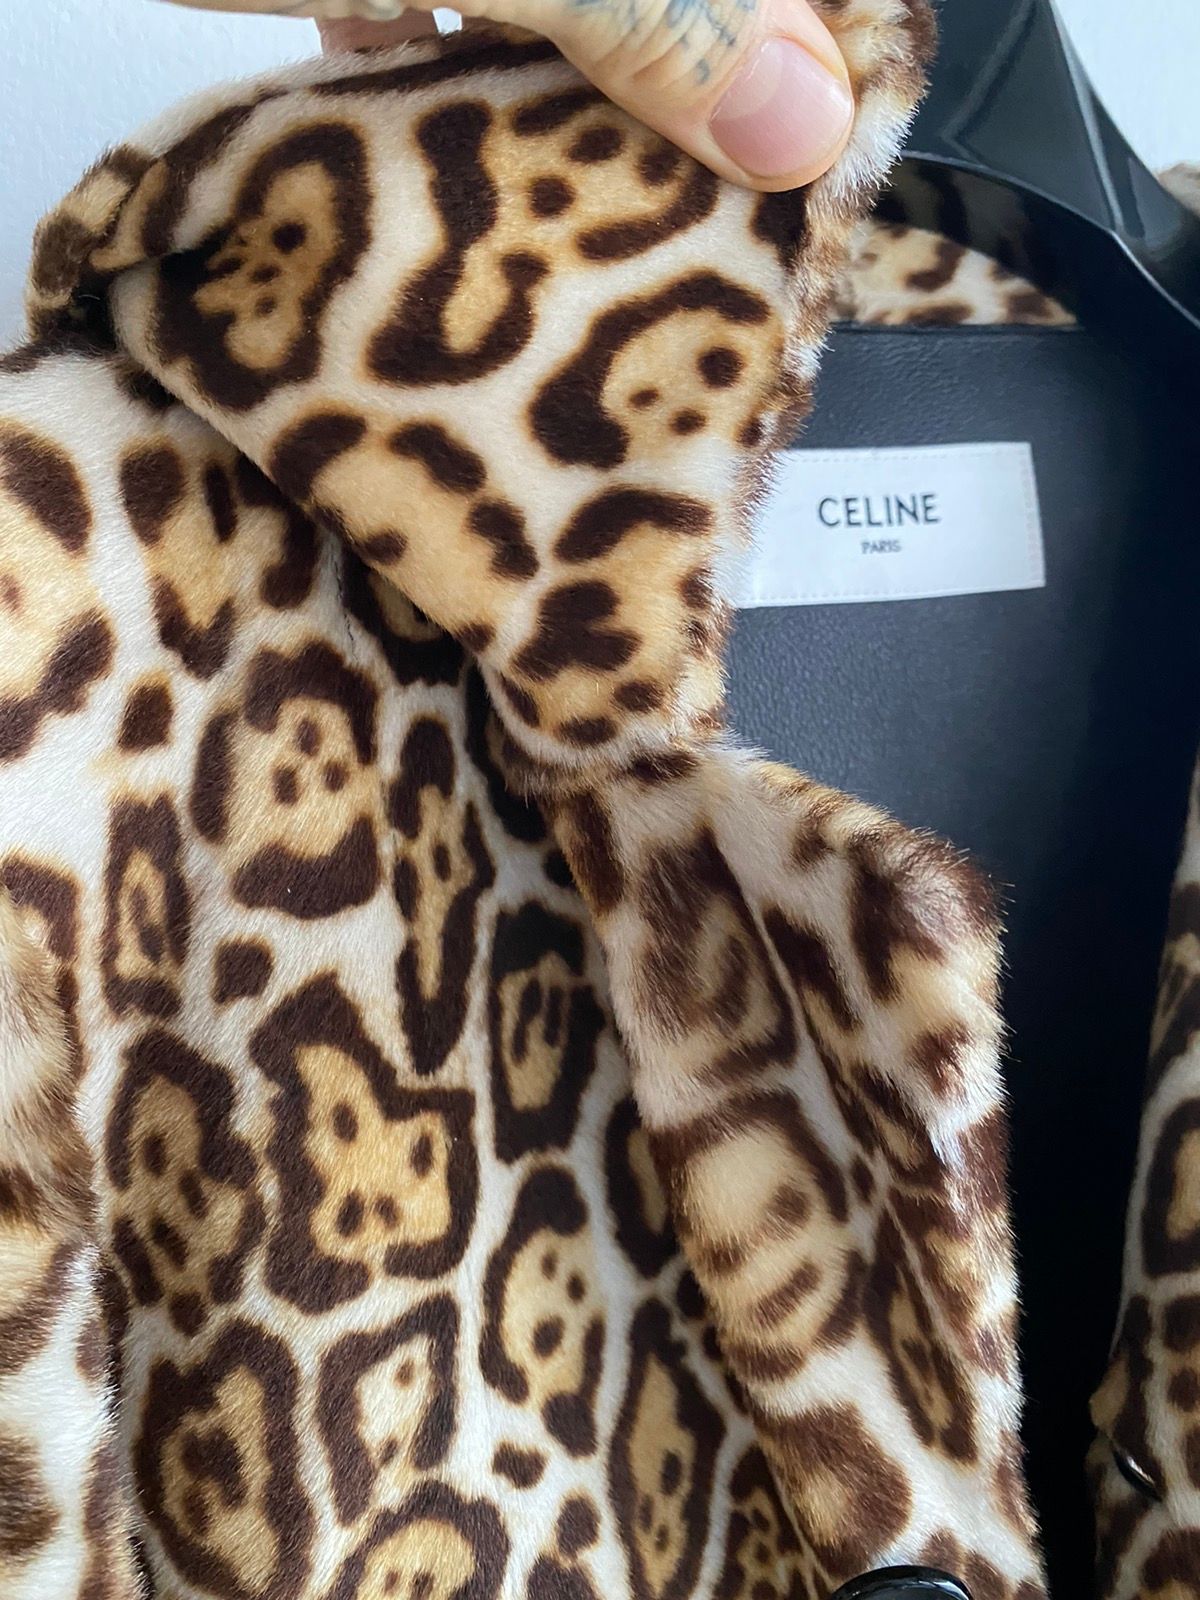 Celine NEW FW19 FUR LEOPARD Leather Jacket Coat $10K